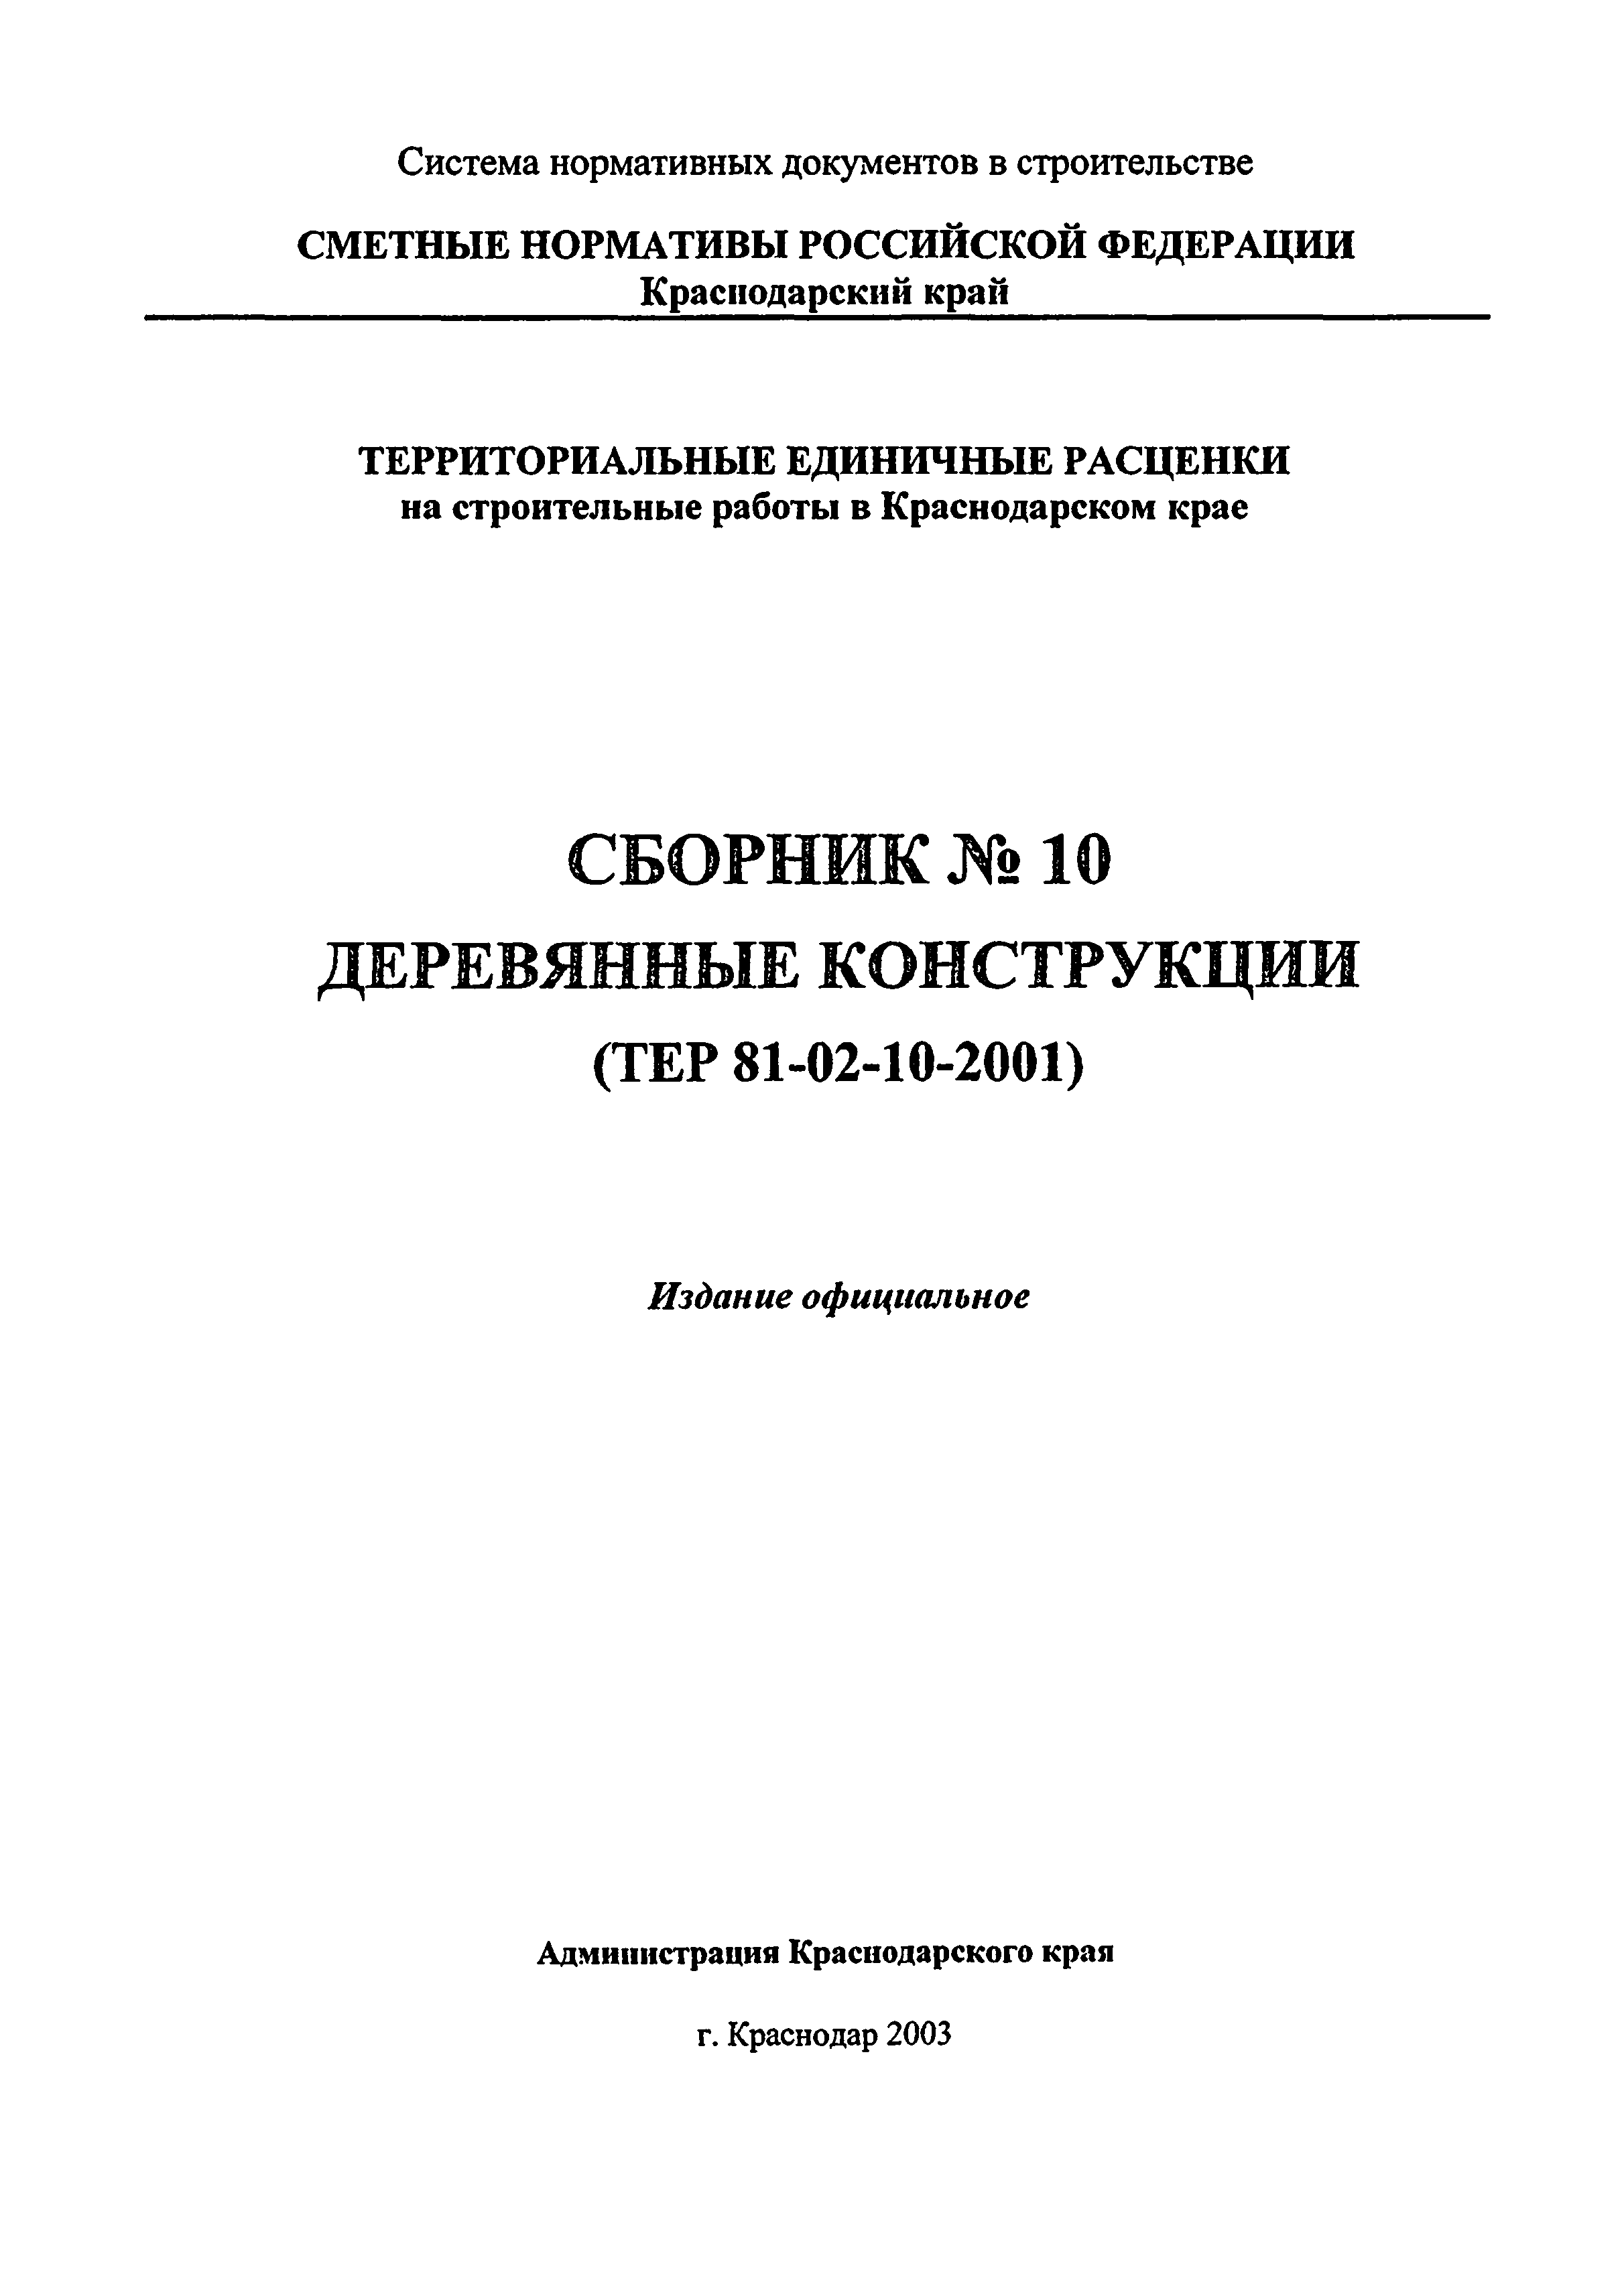 ТЕР Краснодарского края 2001-10